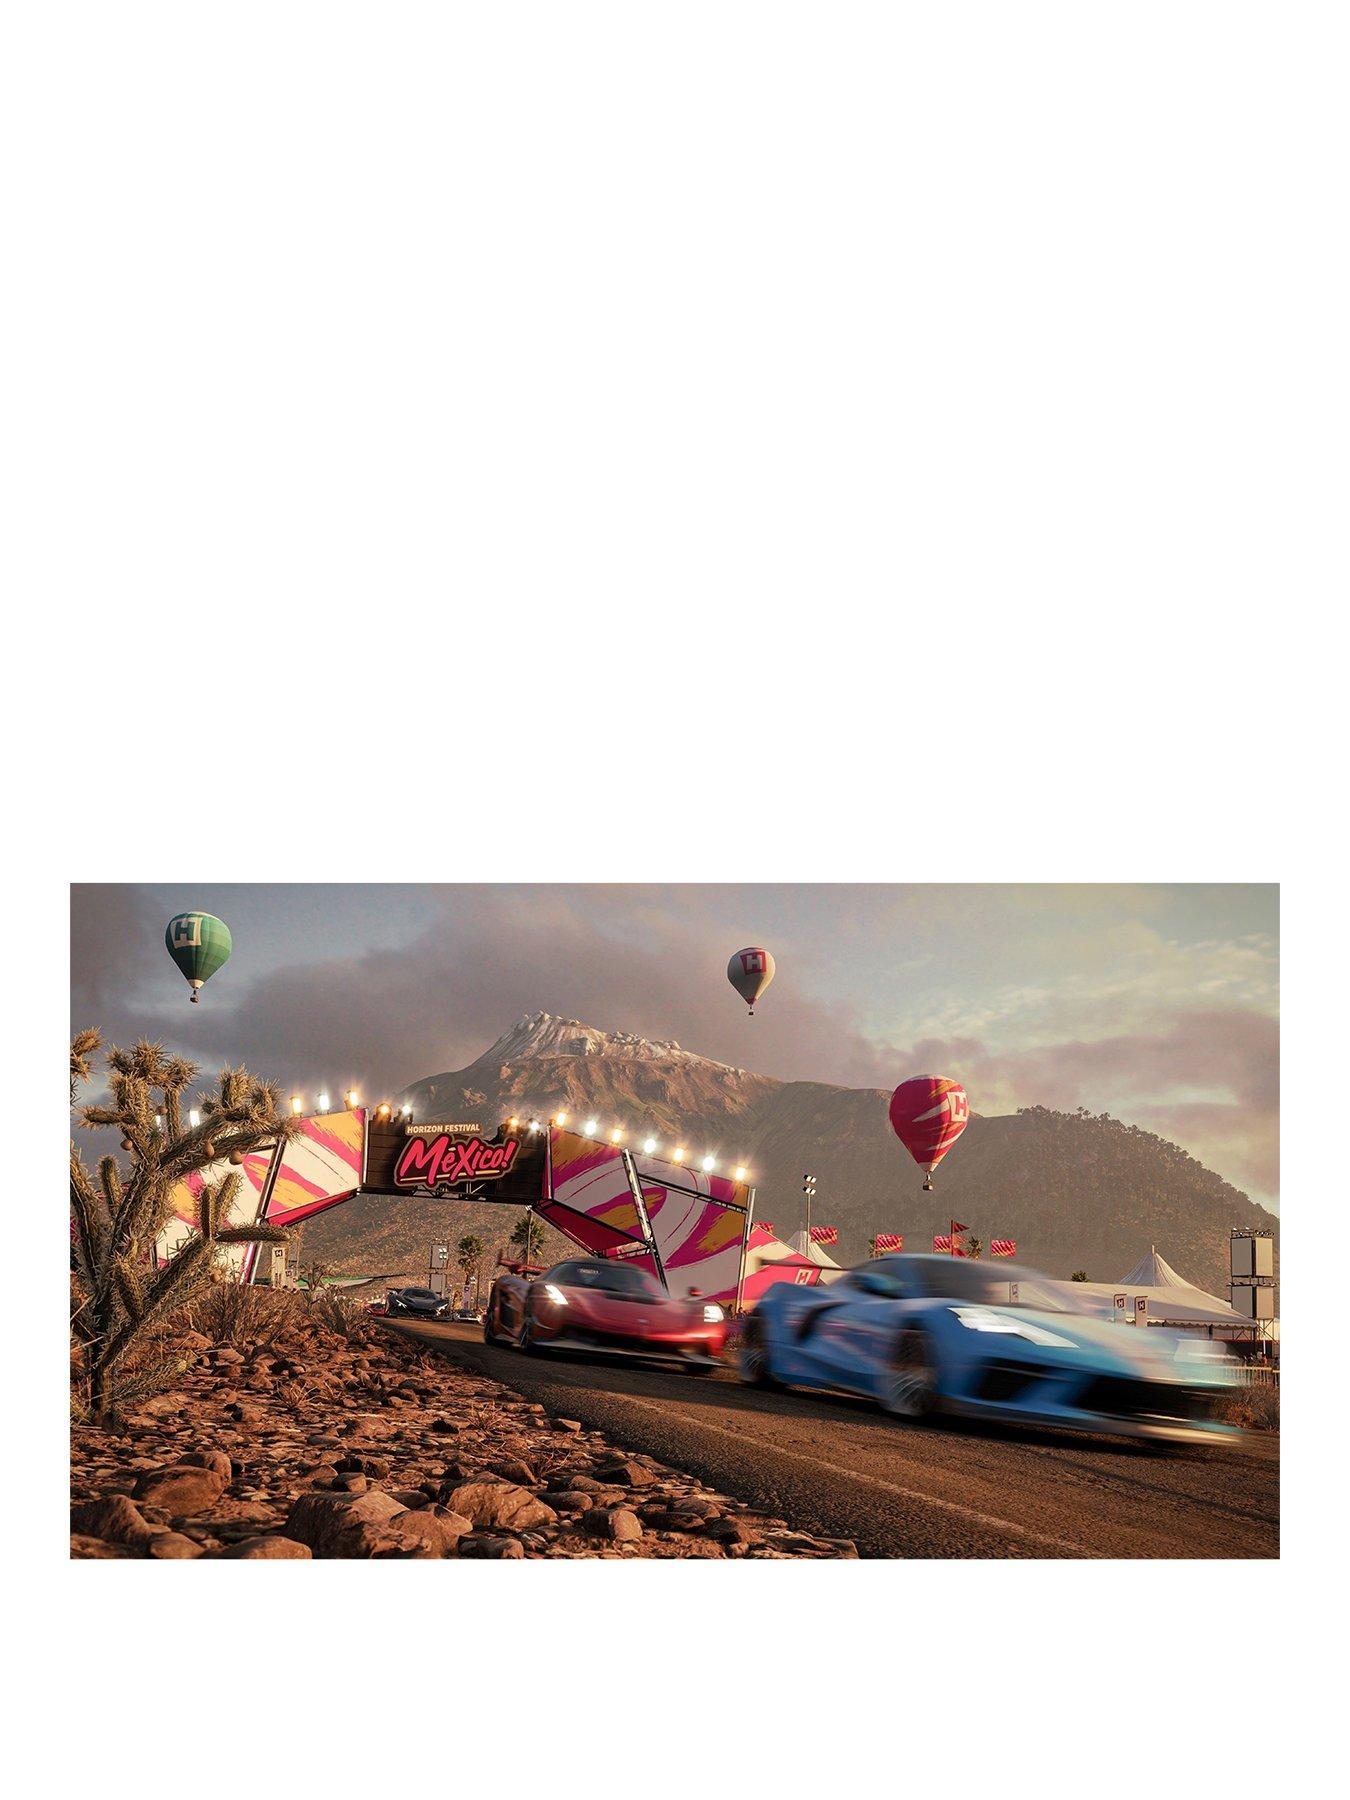 Forza Horizon 5: Premium Edition - Digital Download